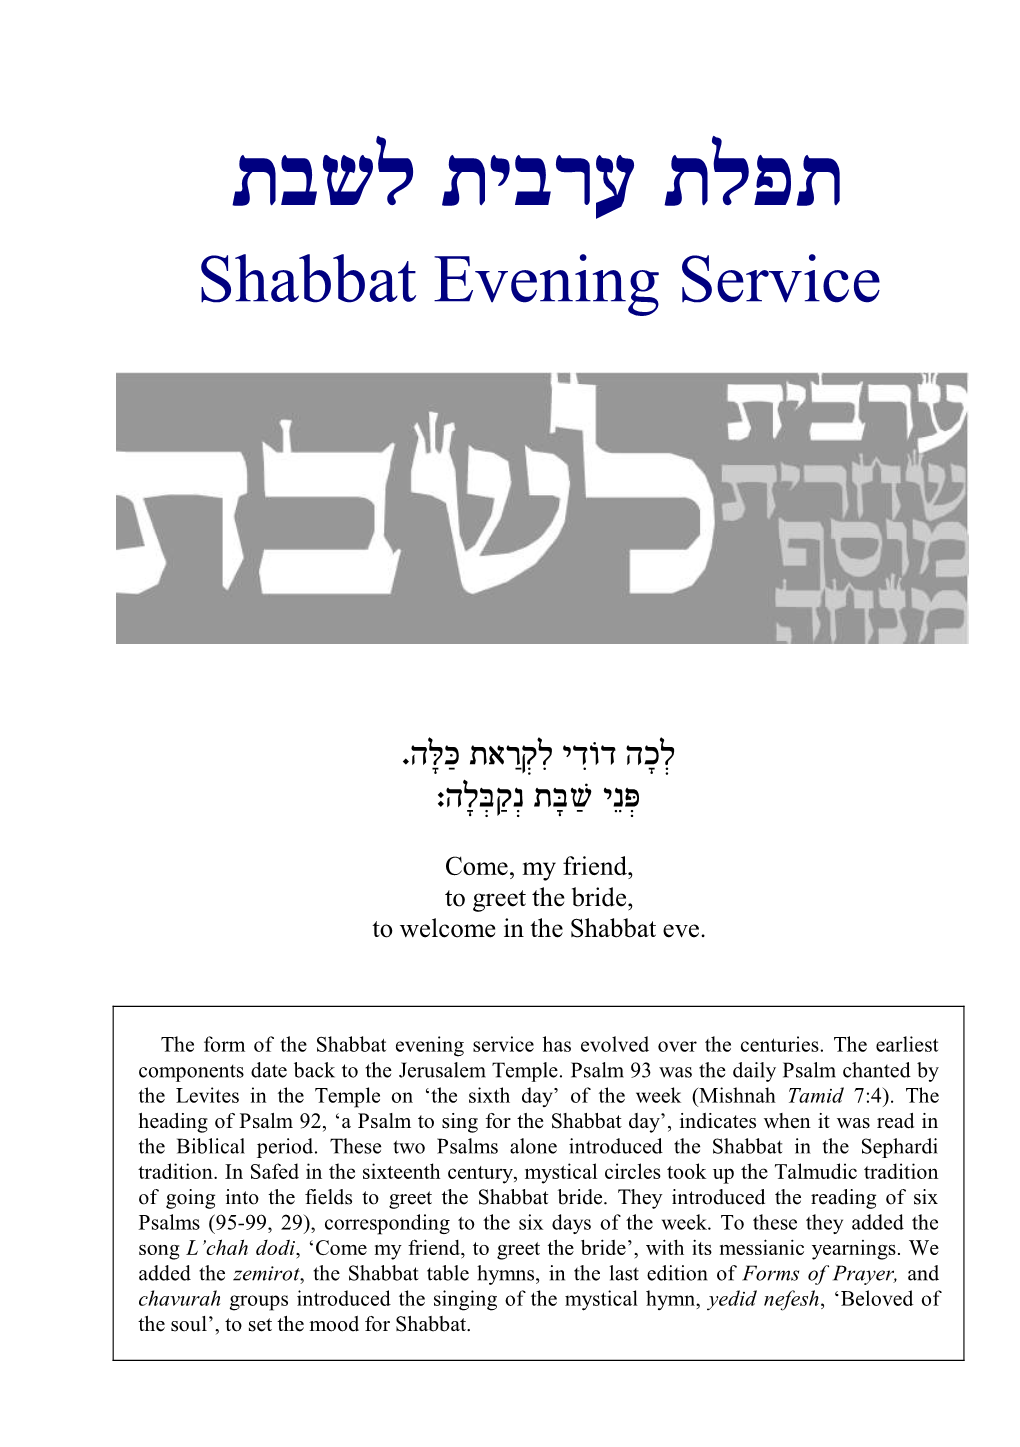 EHRS Shabbat Evening Service 2020